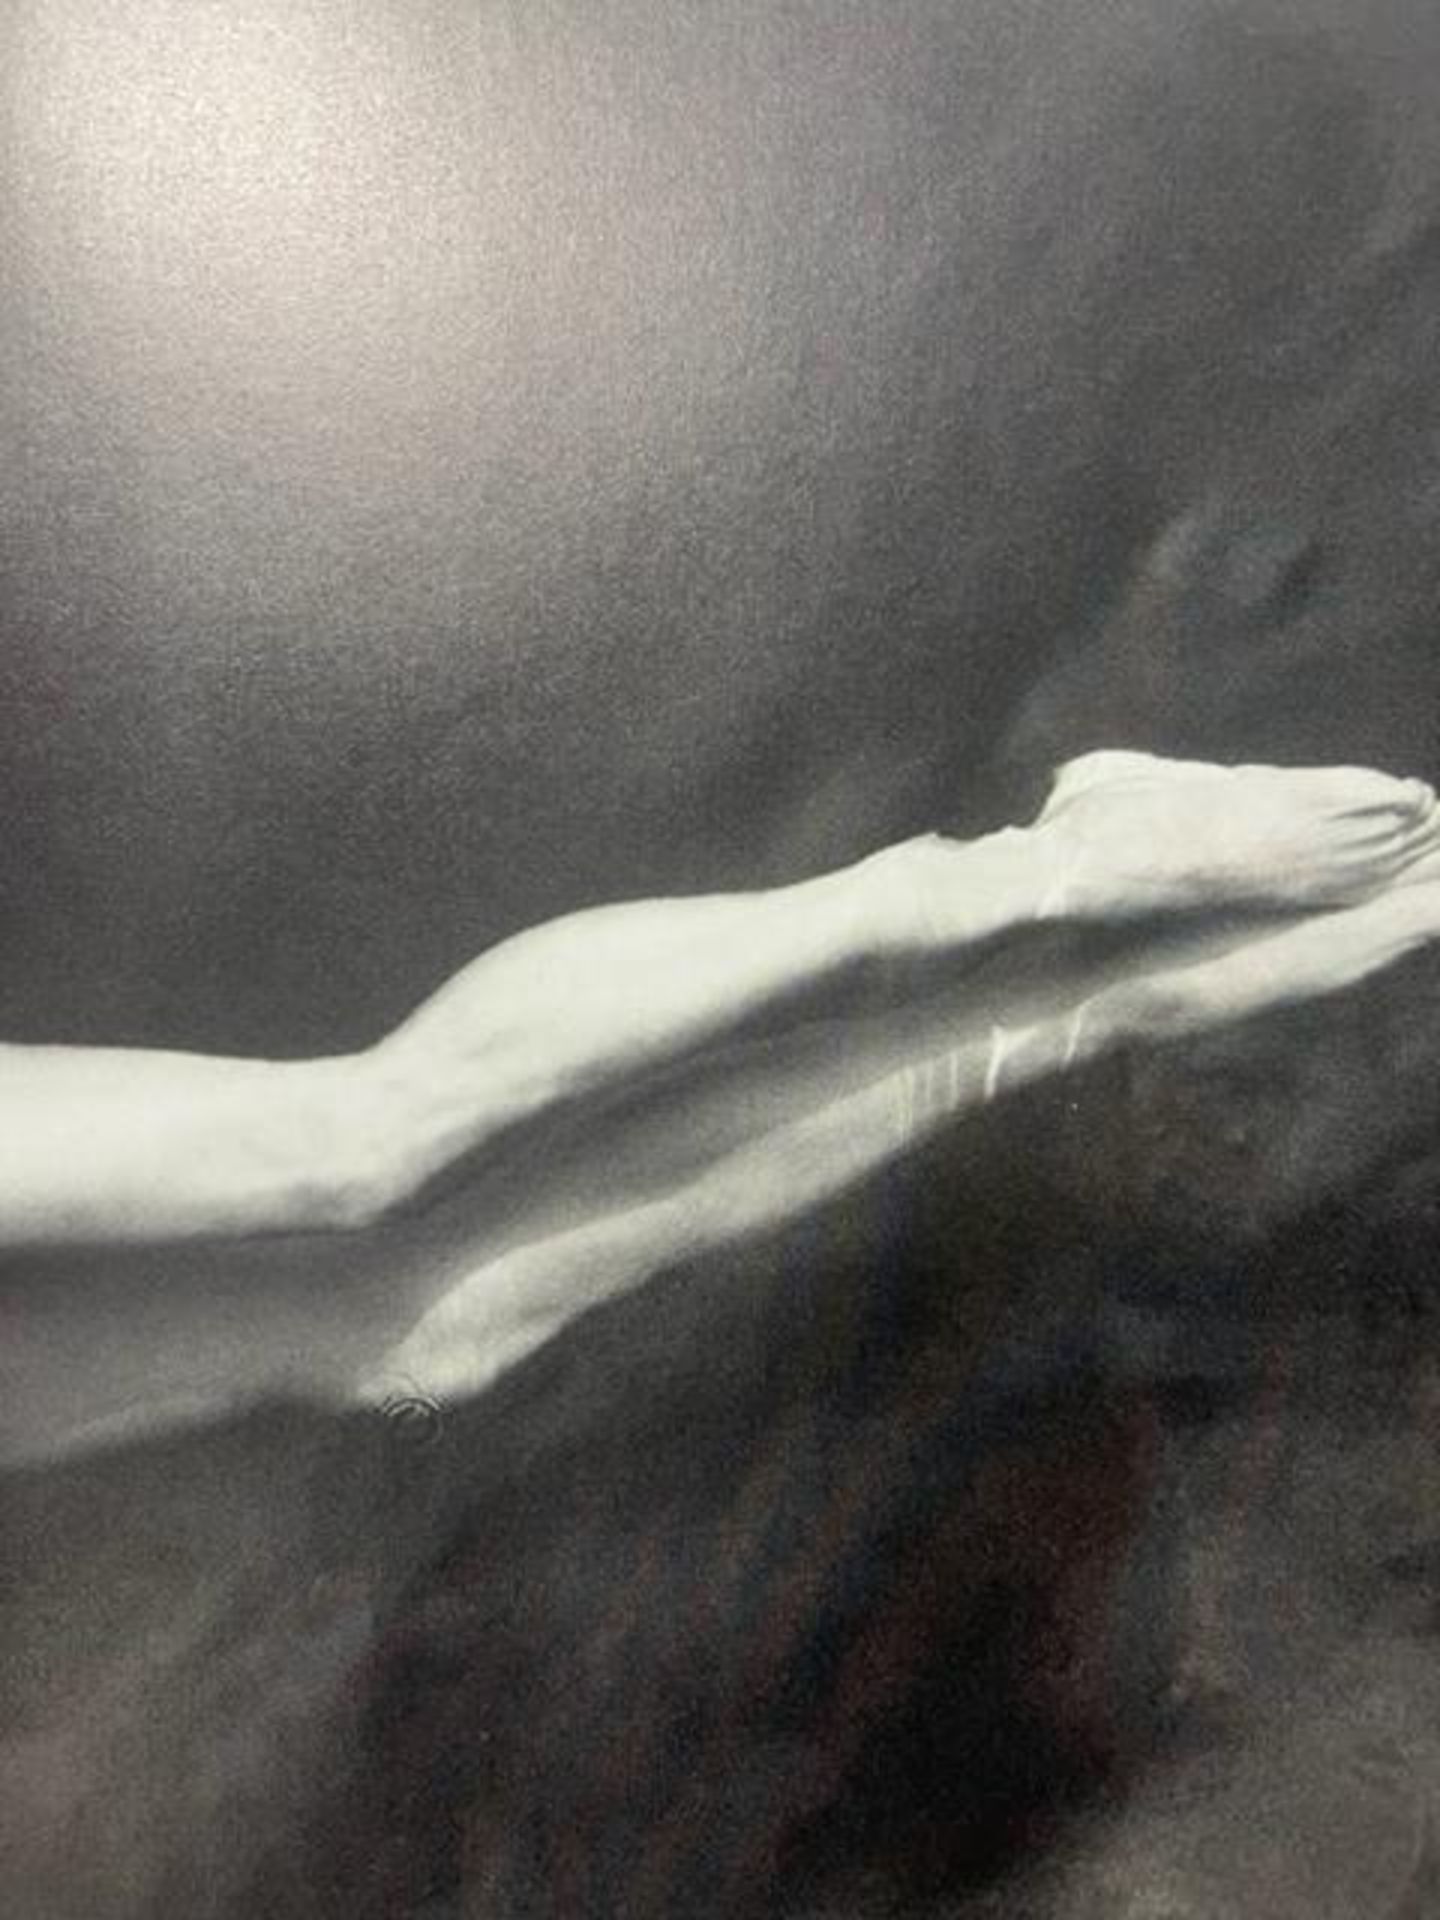 Annie Leibovitz "Untitled" Print. - Image 4 of 6